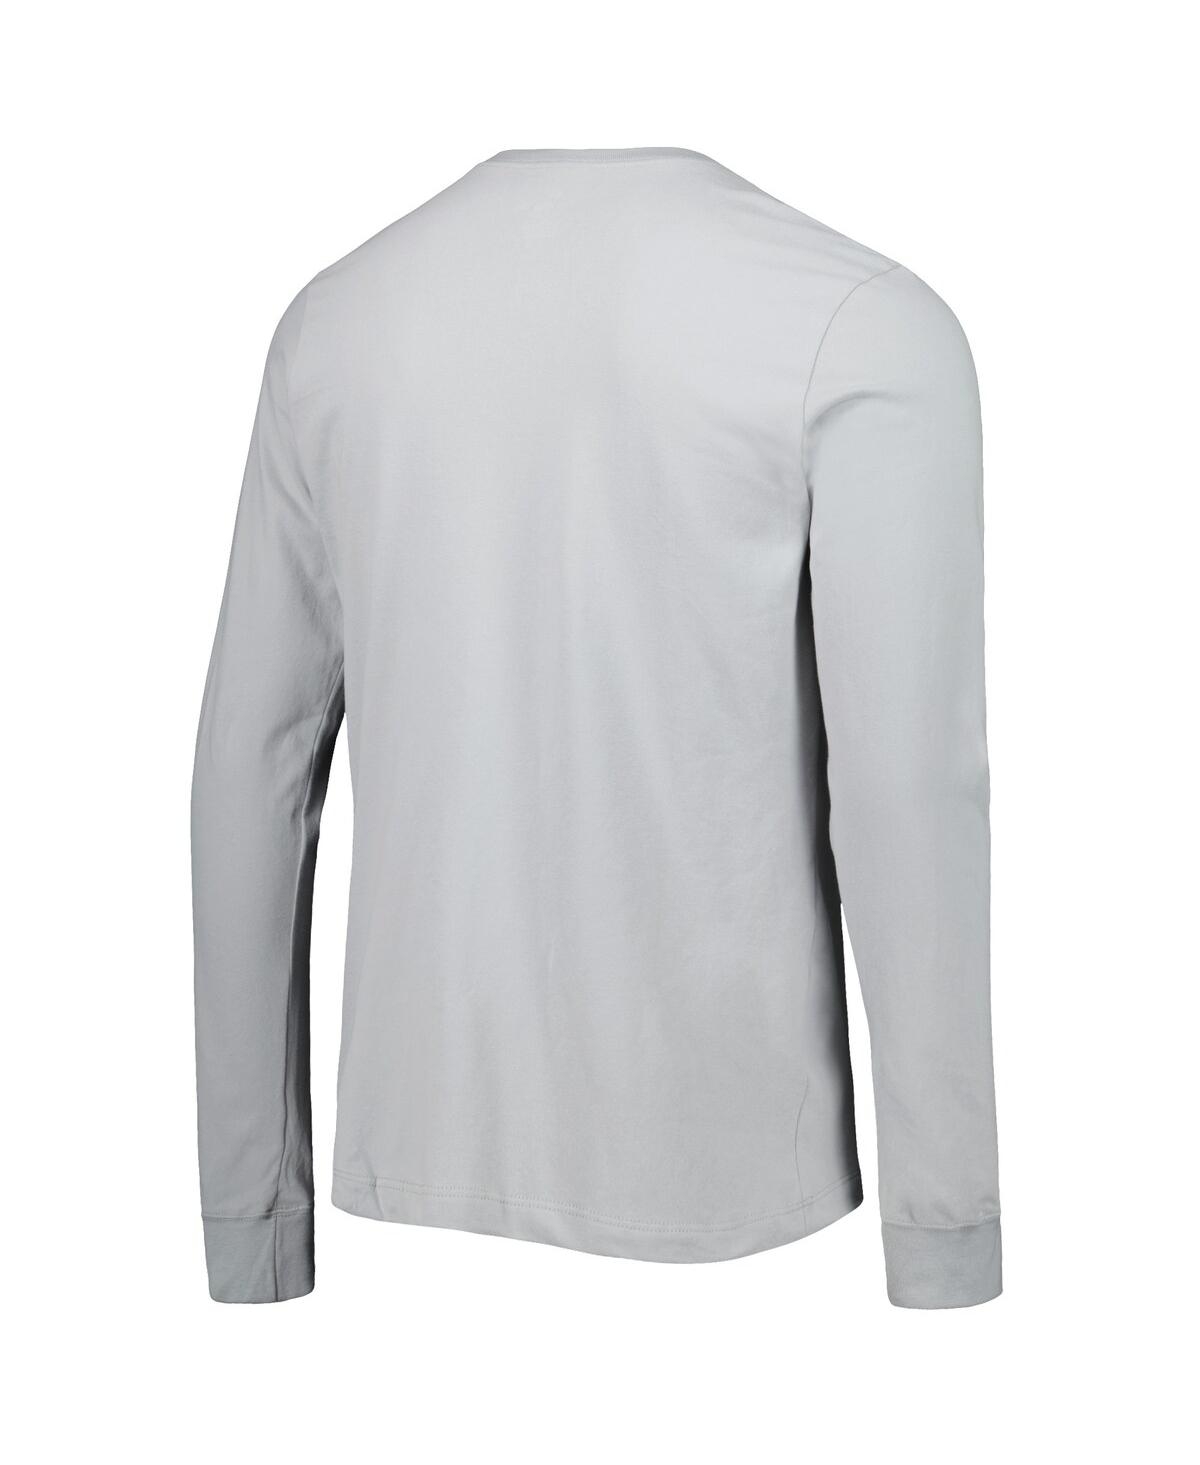 Shop Nike Men's  Gray Stanford Cardinal Team Practice Performance Long Sleeve T-shirt